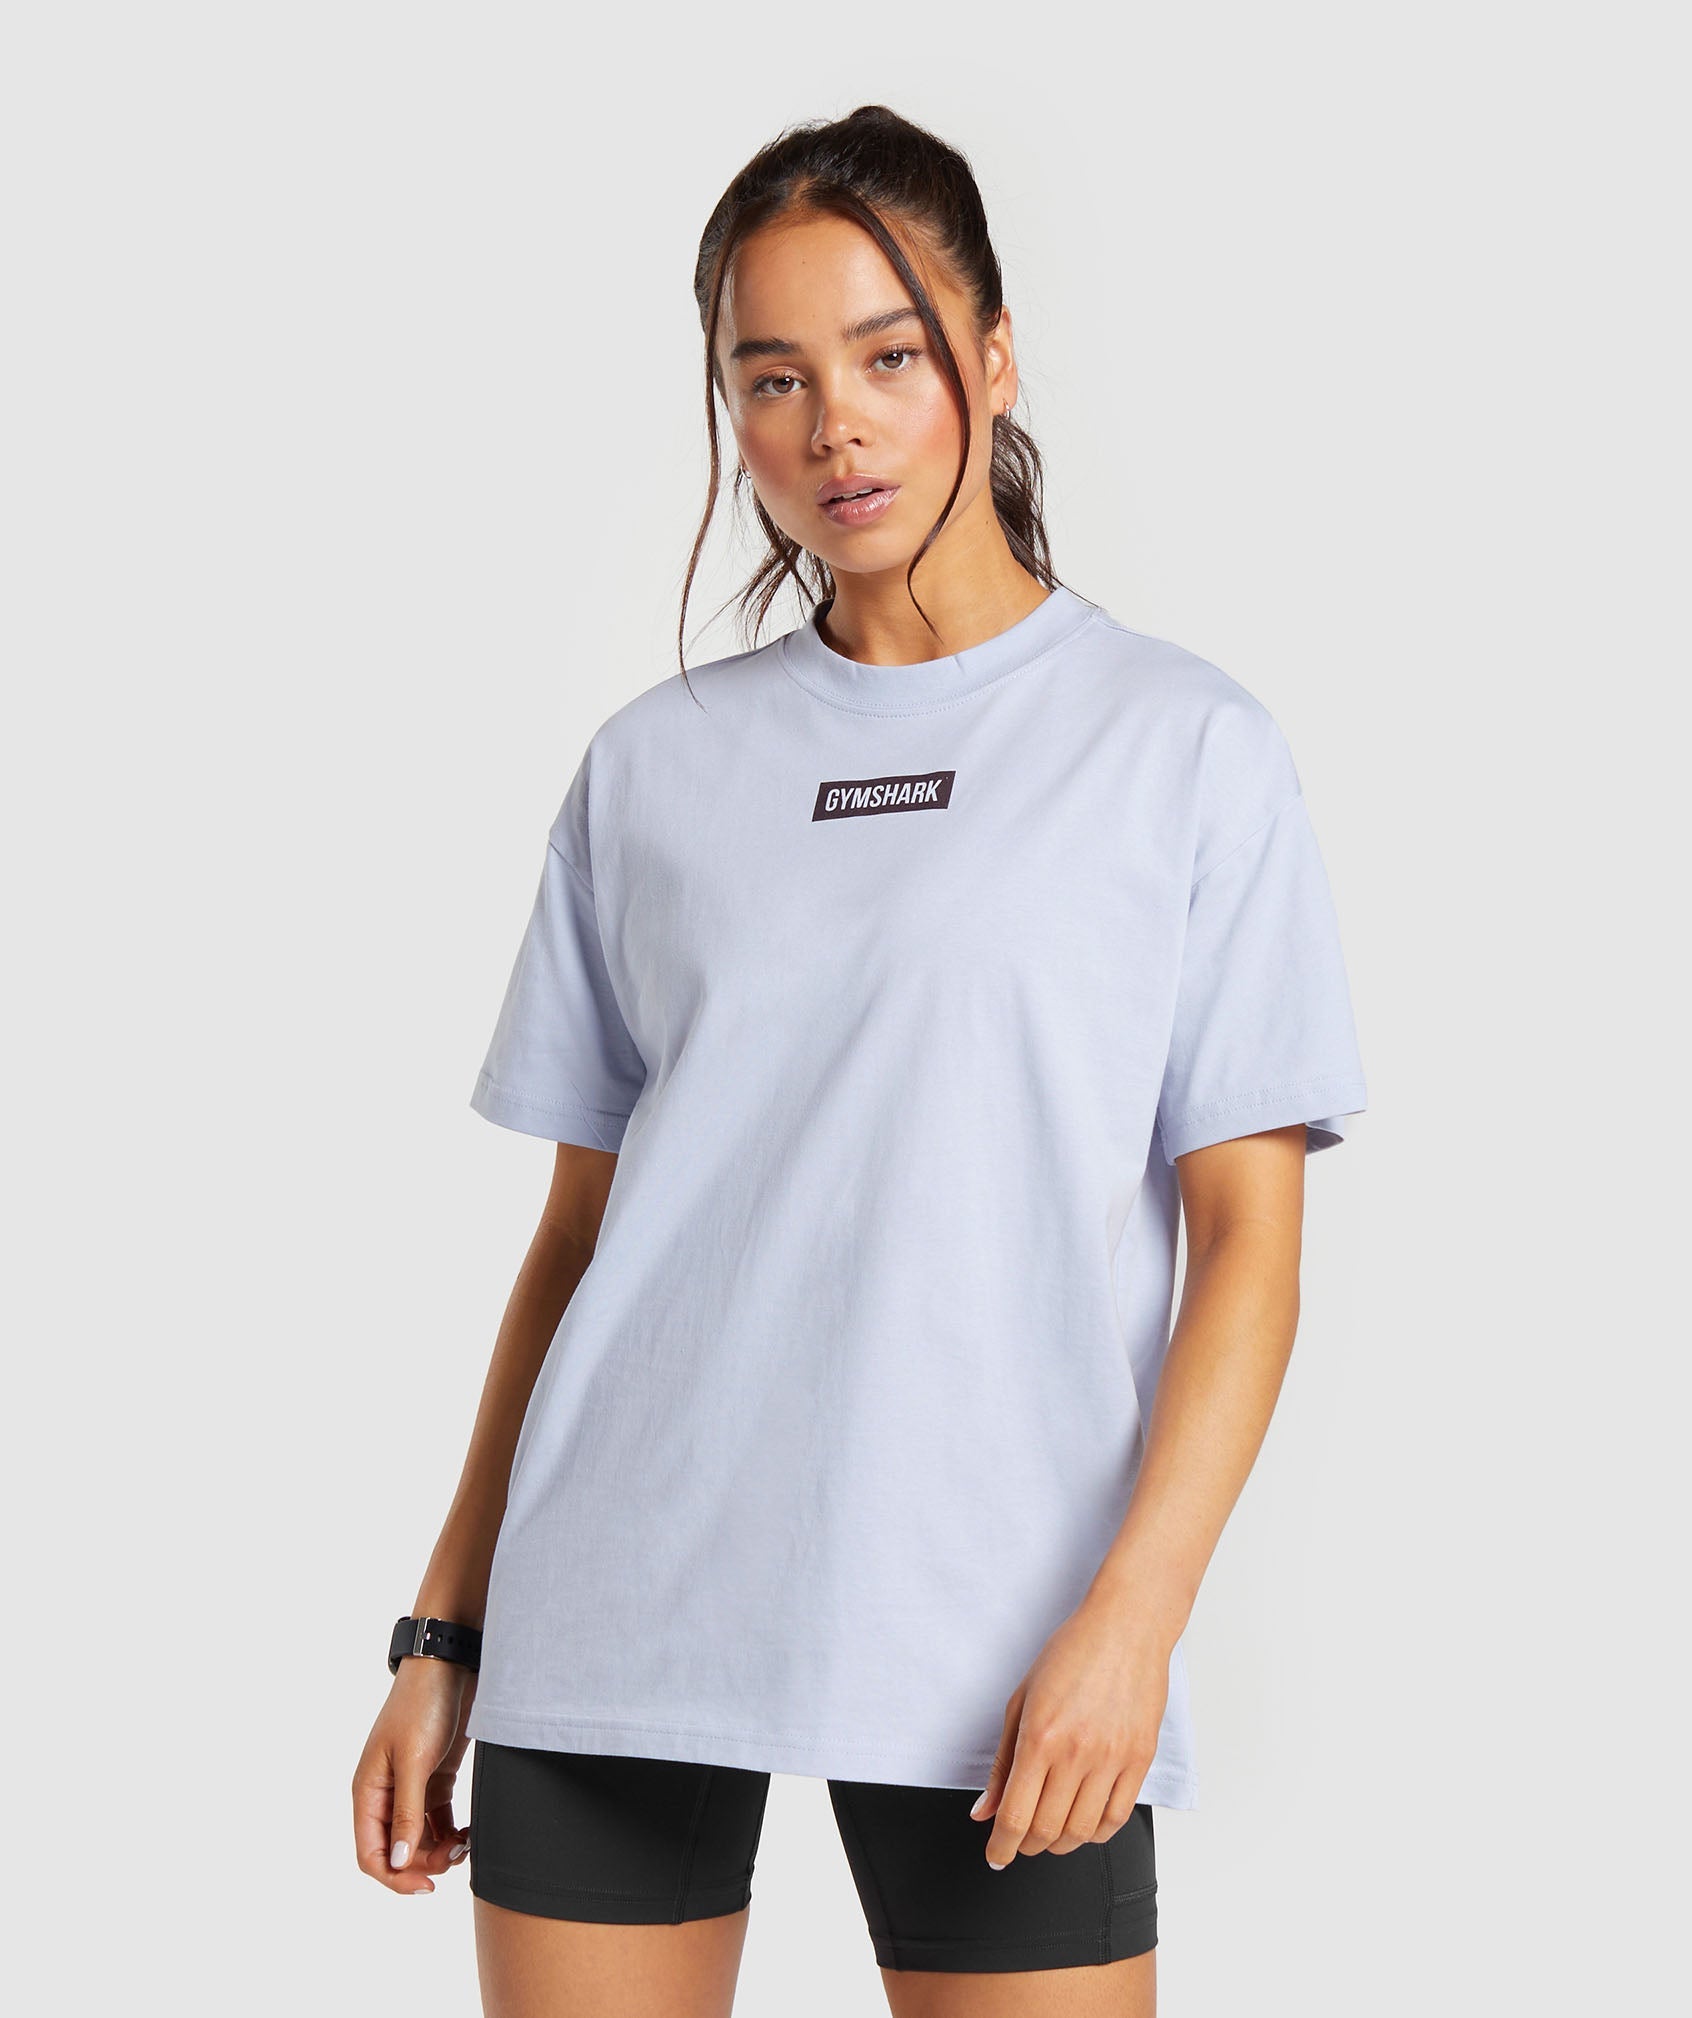 Camisetas mujer manga larga Extreme- Camisetas baratas para peluquerías-  Centros de estética